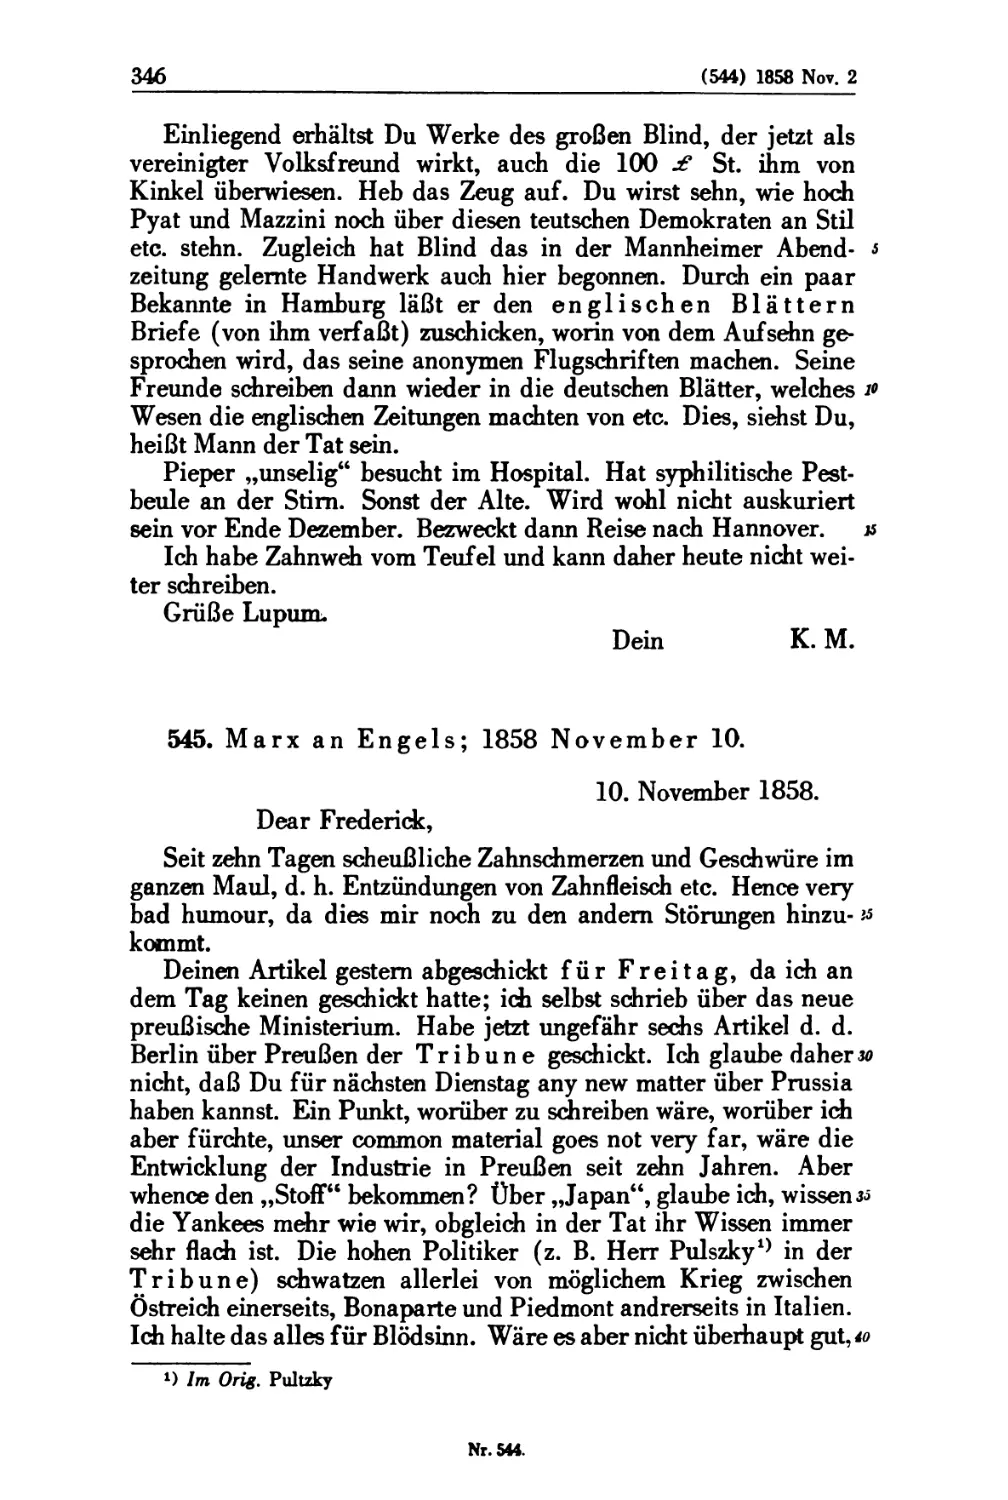 545. Marx an Engels; 1858 November 10